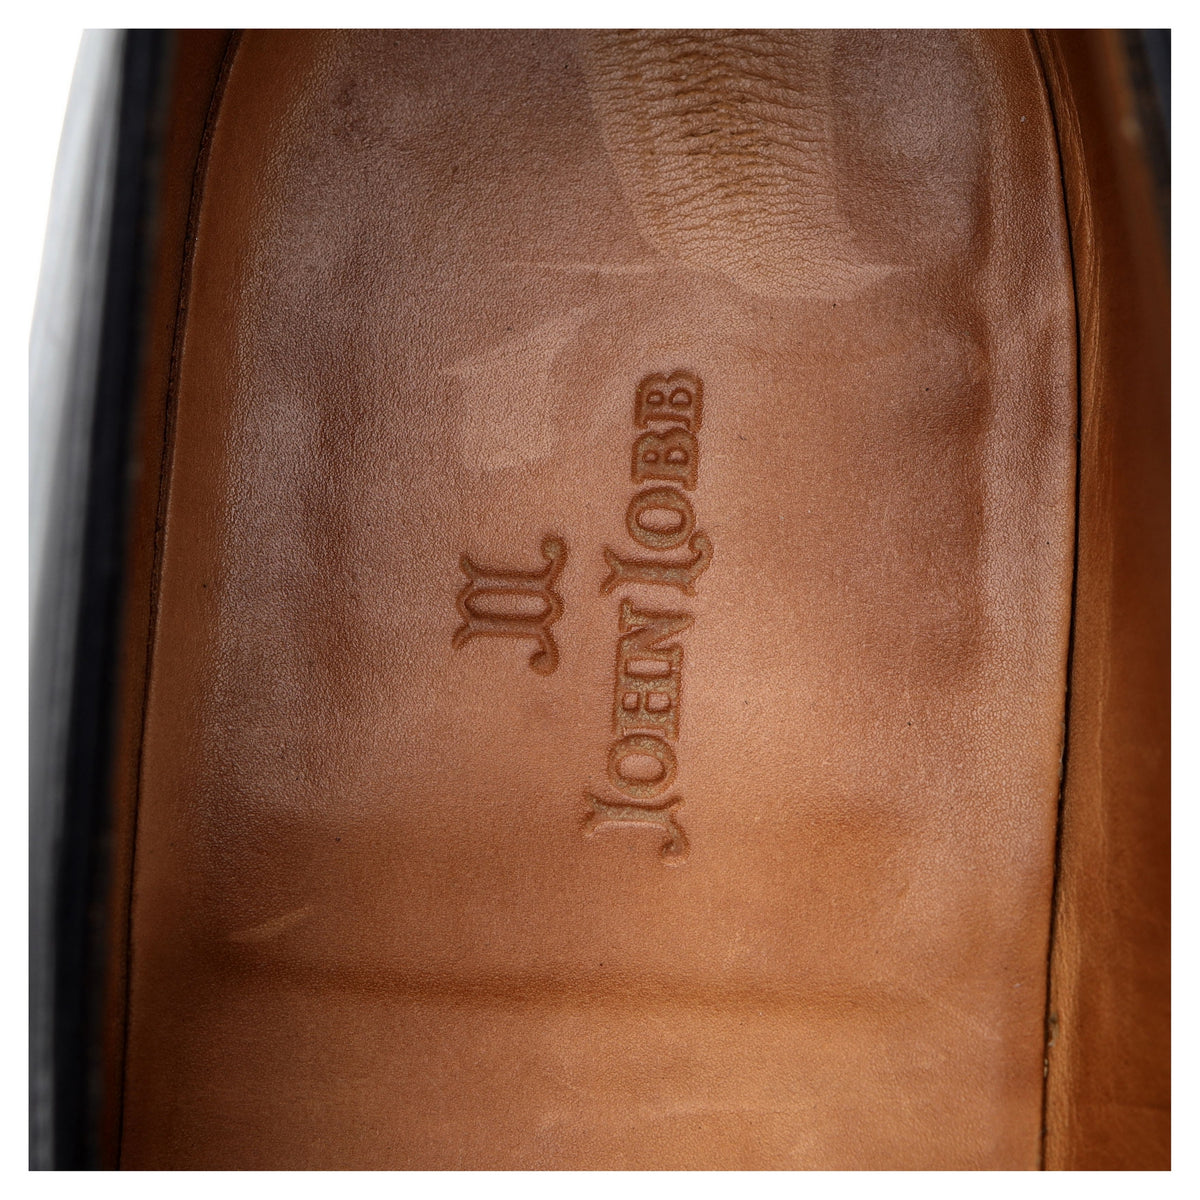 &#39;Cheltenham&#39; Dark Grey Leather Loafers UK 10 E